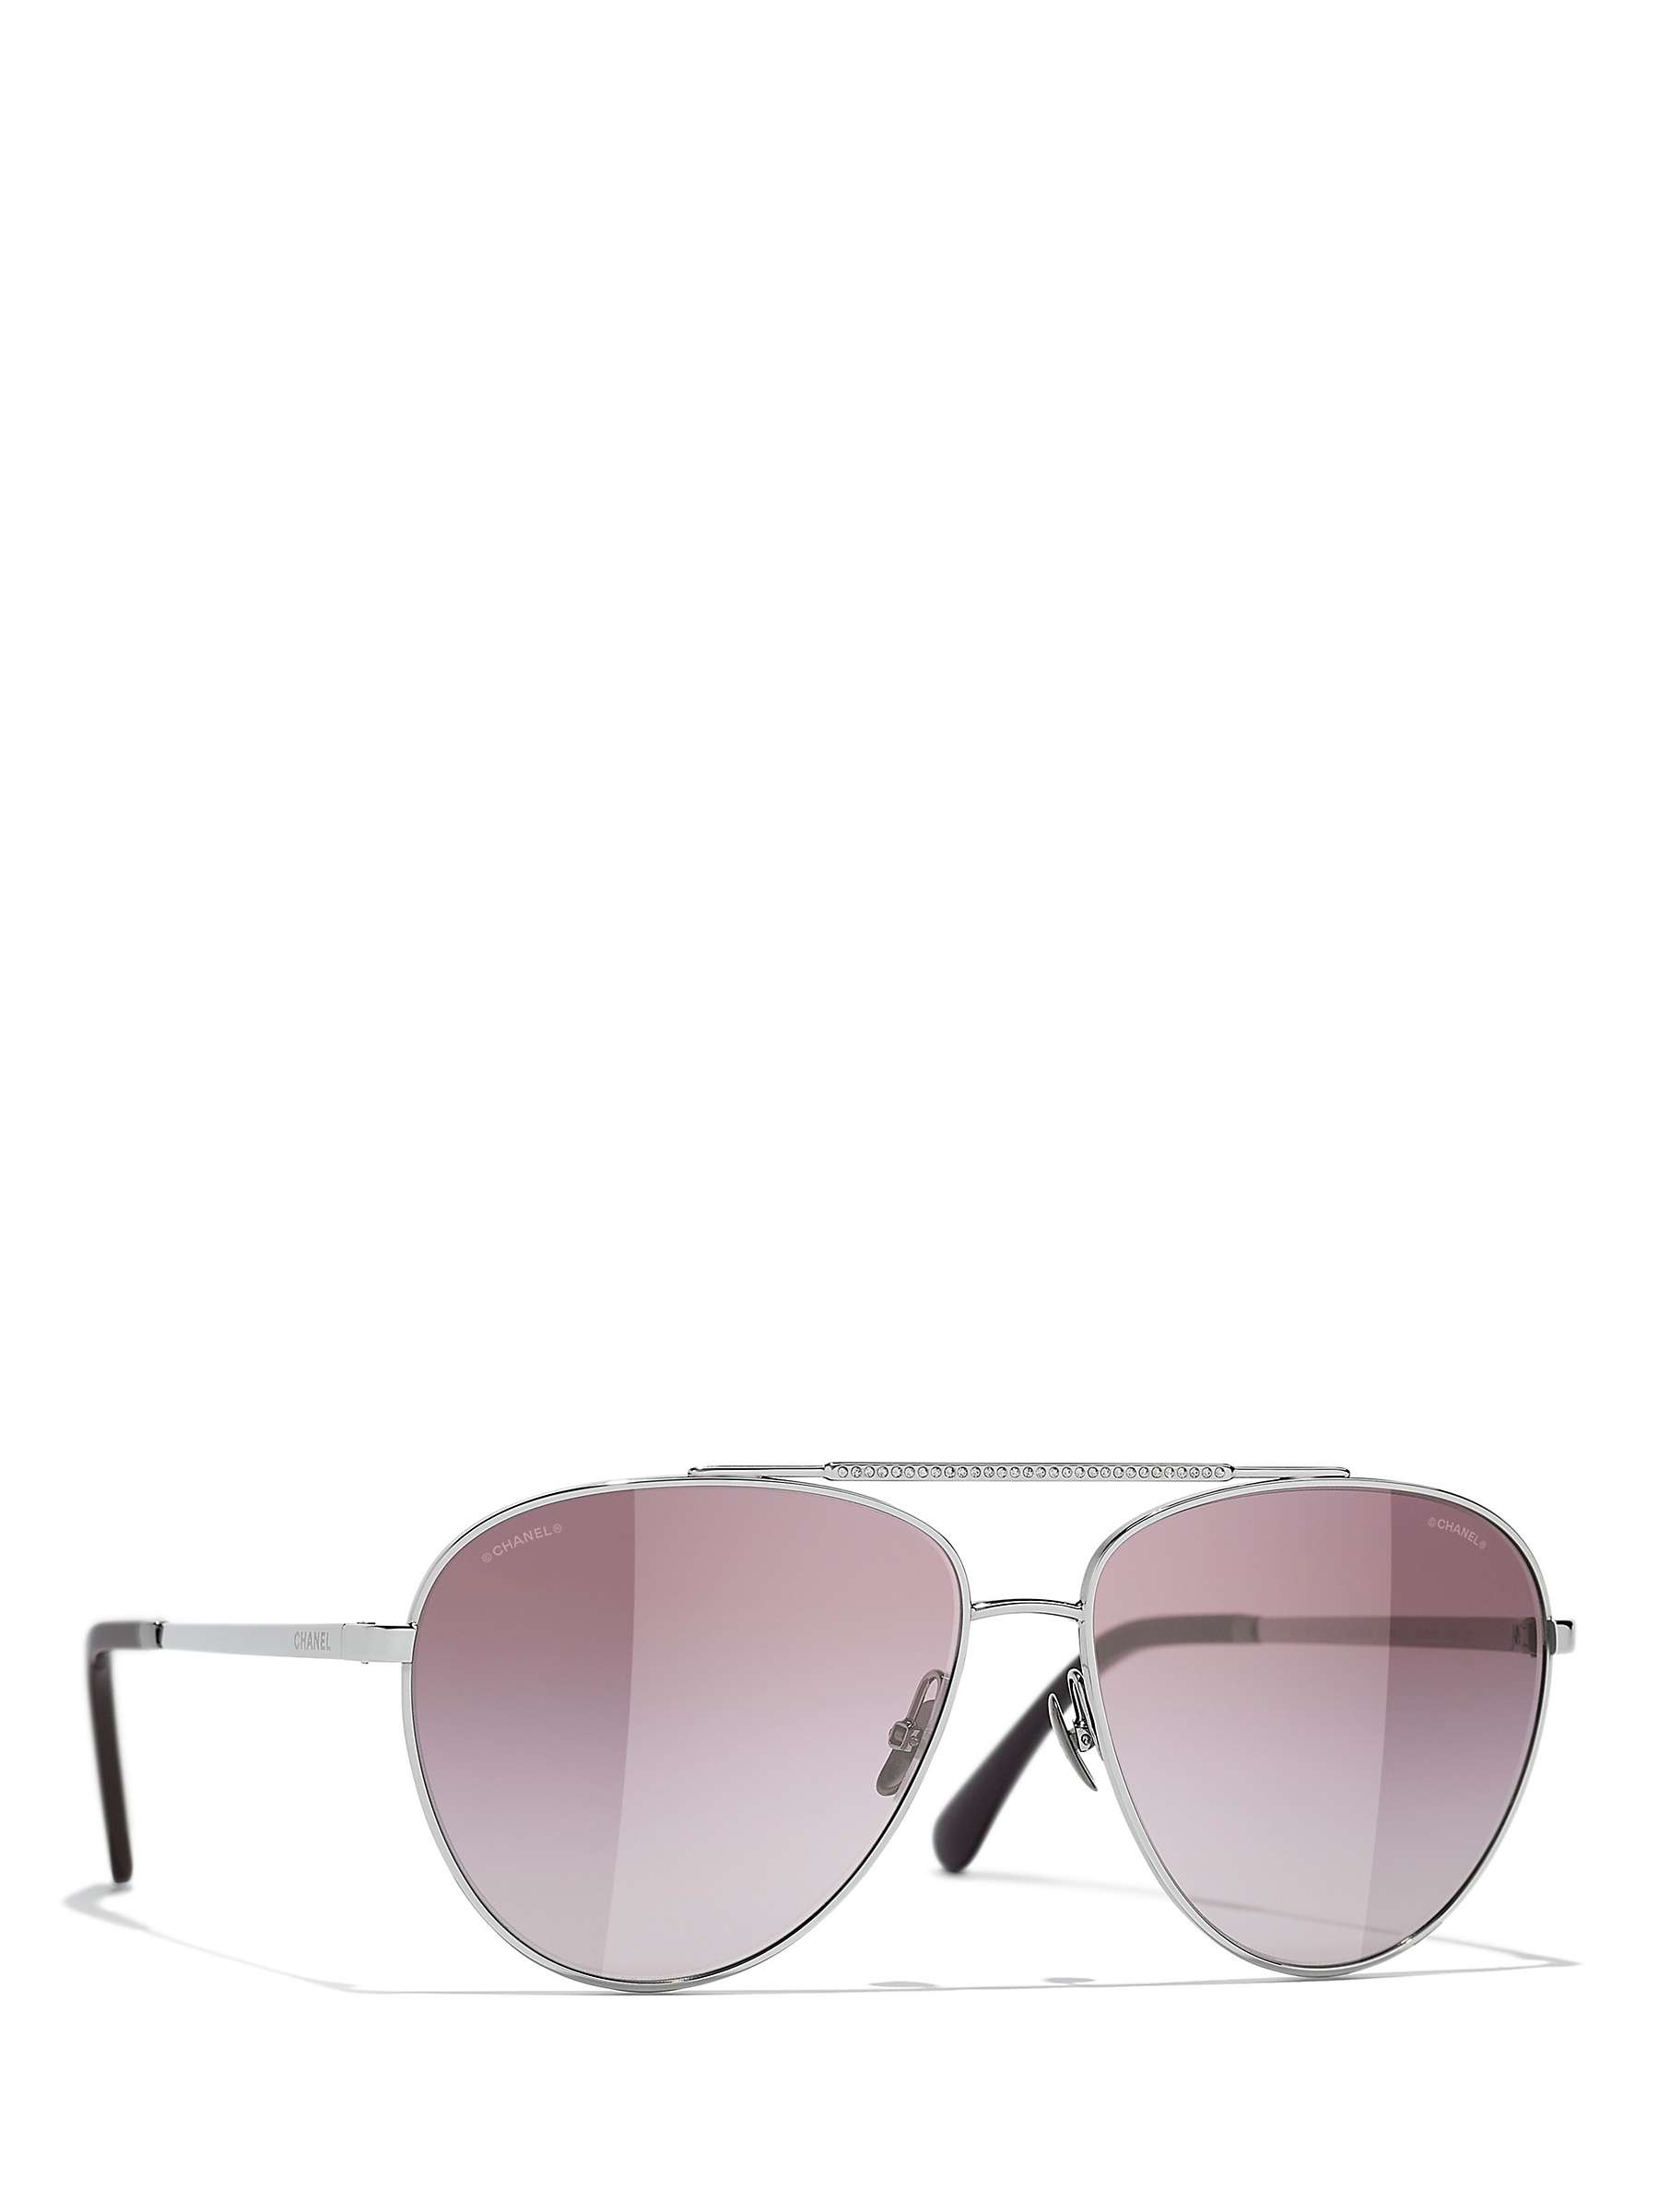 Buy CHANEL Pilot Sunglasses CH4279B Gunmetal/Violet Gradient Online at johnlewis.com